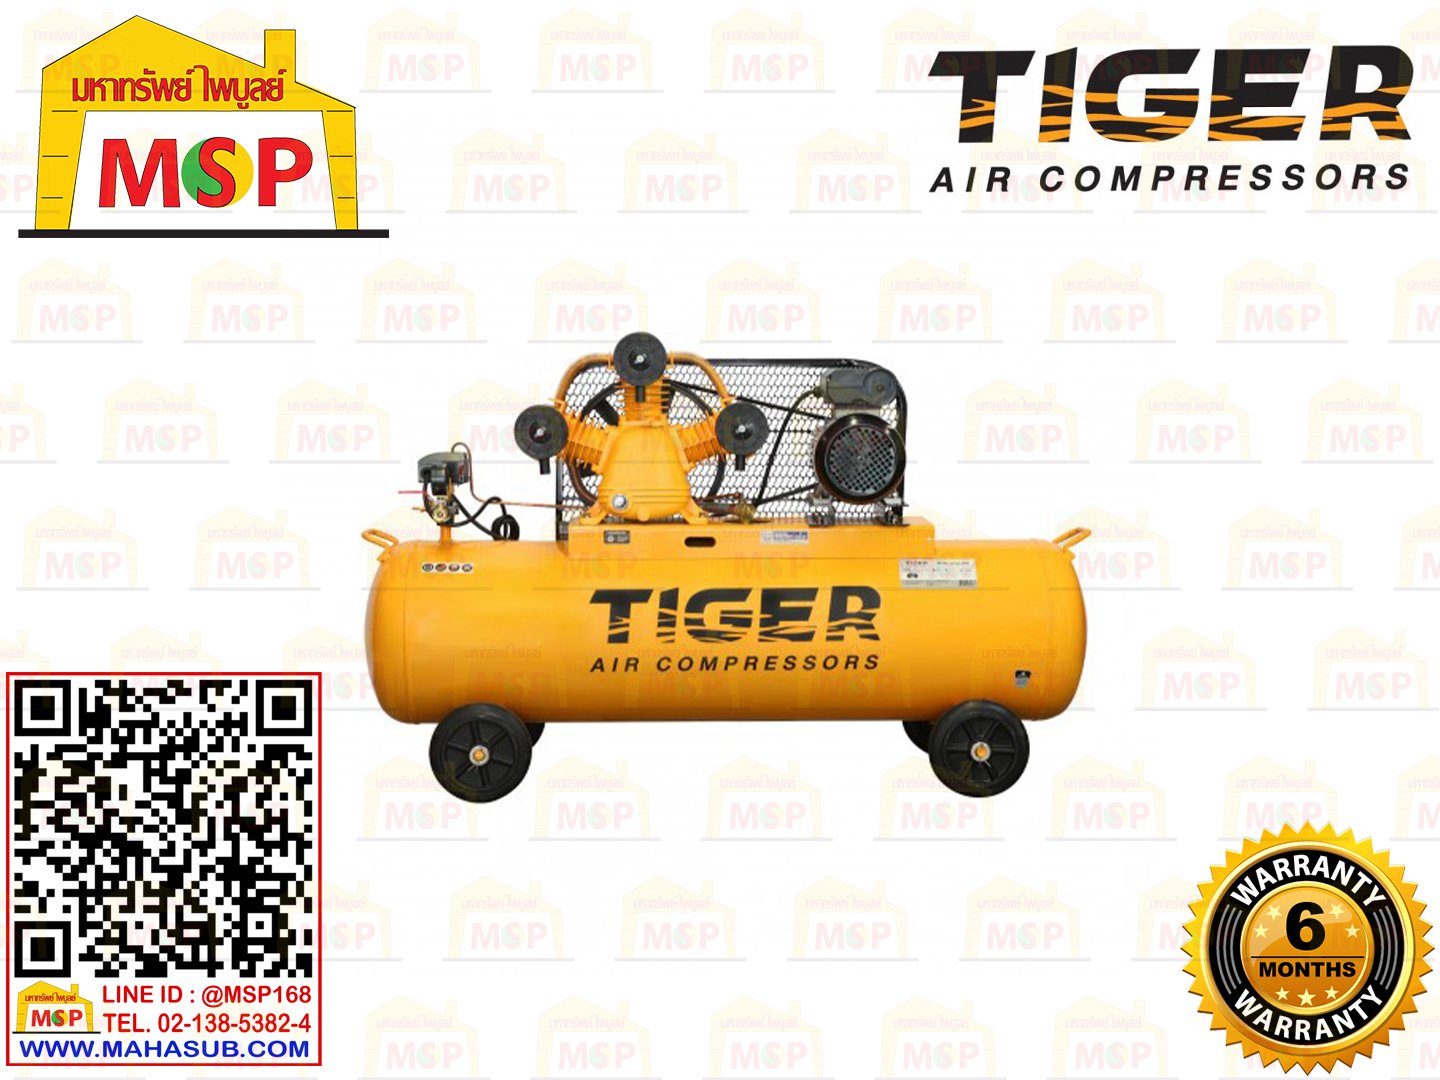 Tiger ชุดปั๊มลมสำเร็จ TGA310-500M 3สูบ 500L มอเตอร์ 10HP 380V